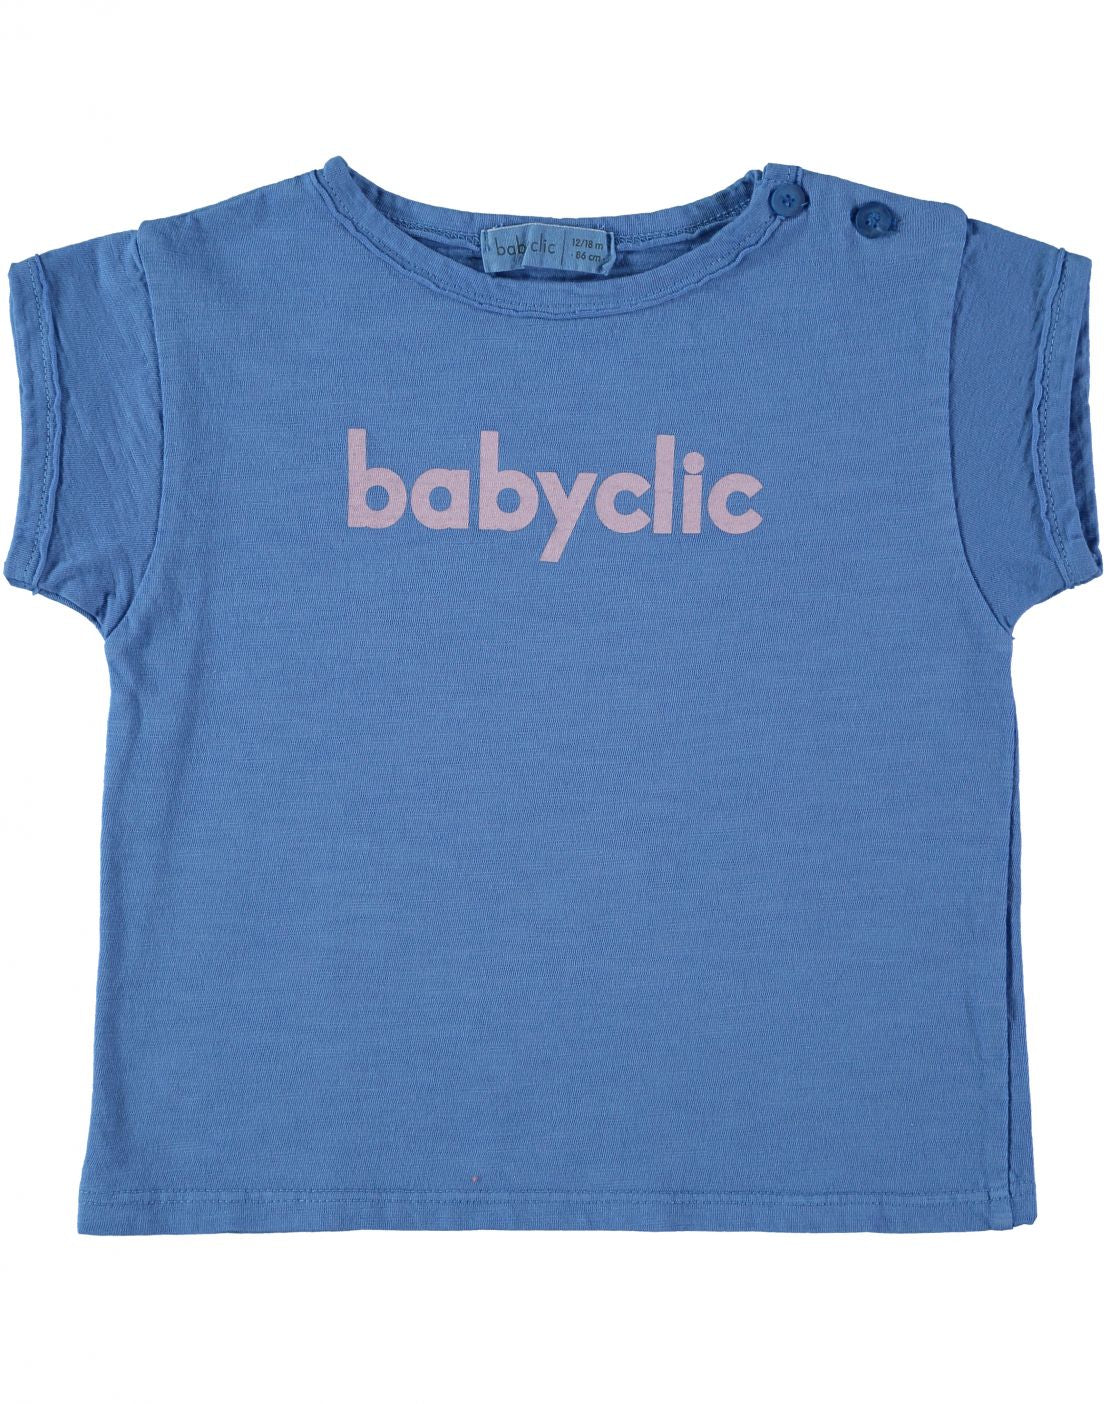 Babyclic T-shirt electric blue